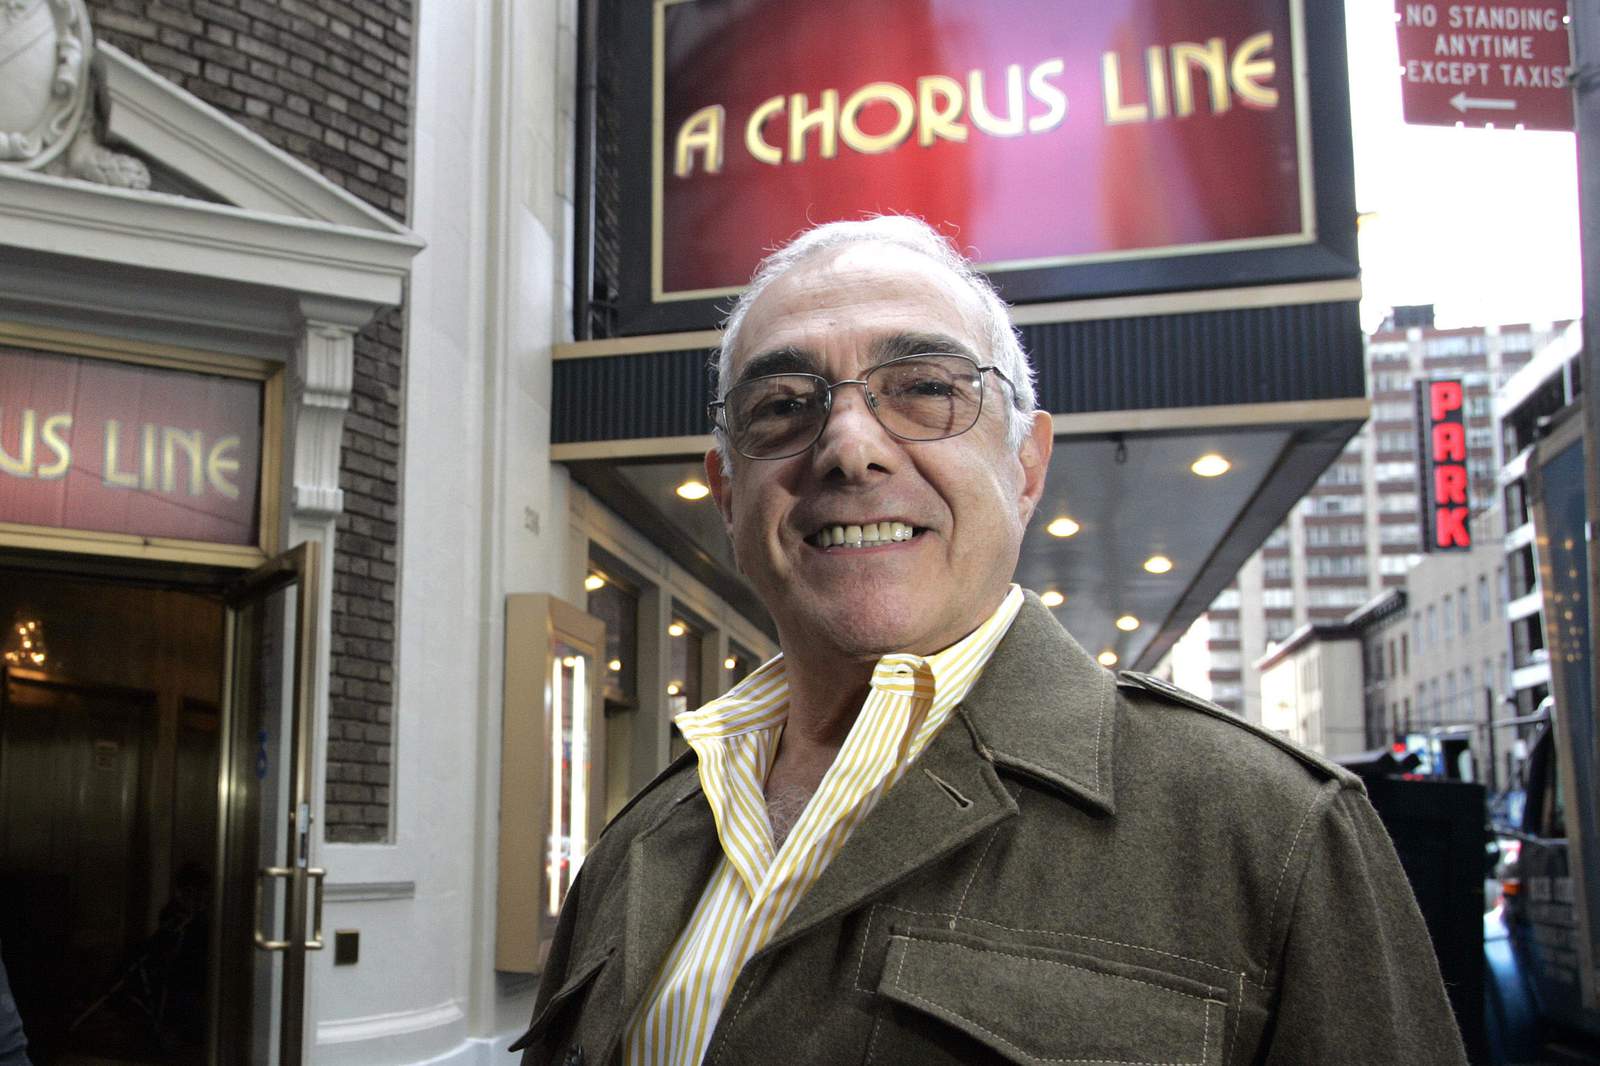 Tony Award-winning choreographer Bob Avian dies at 83